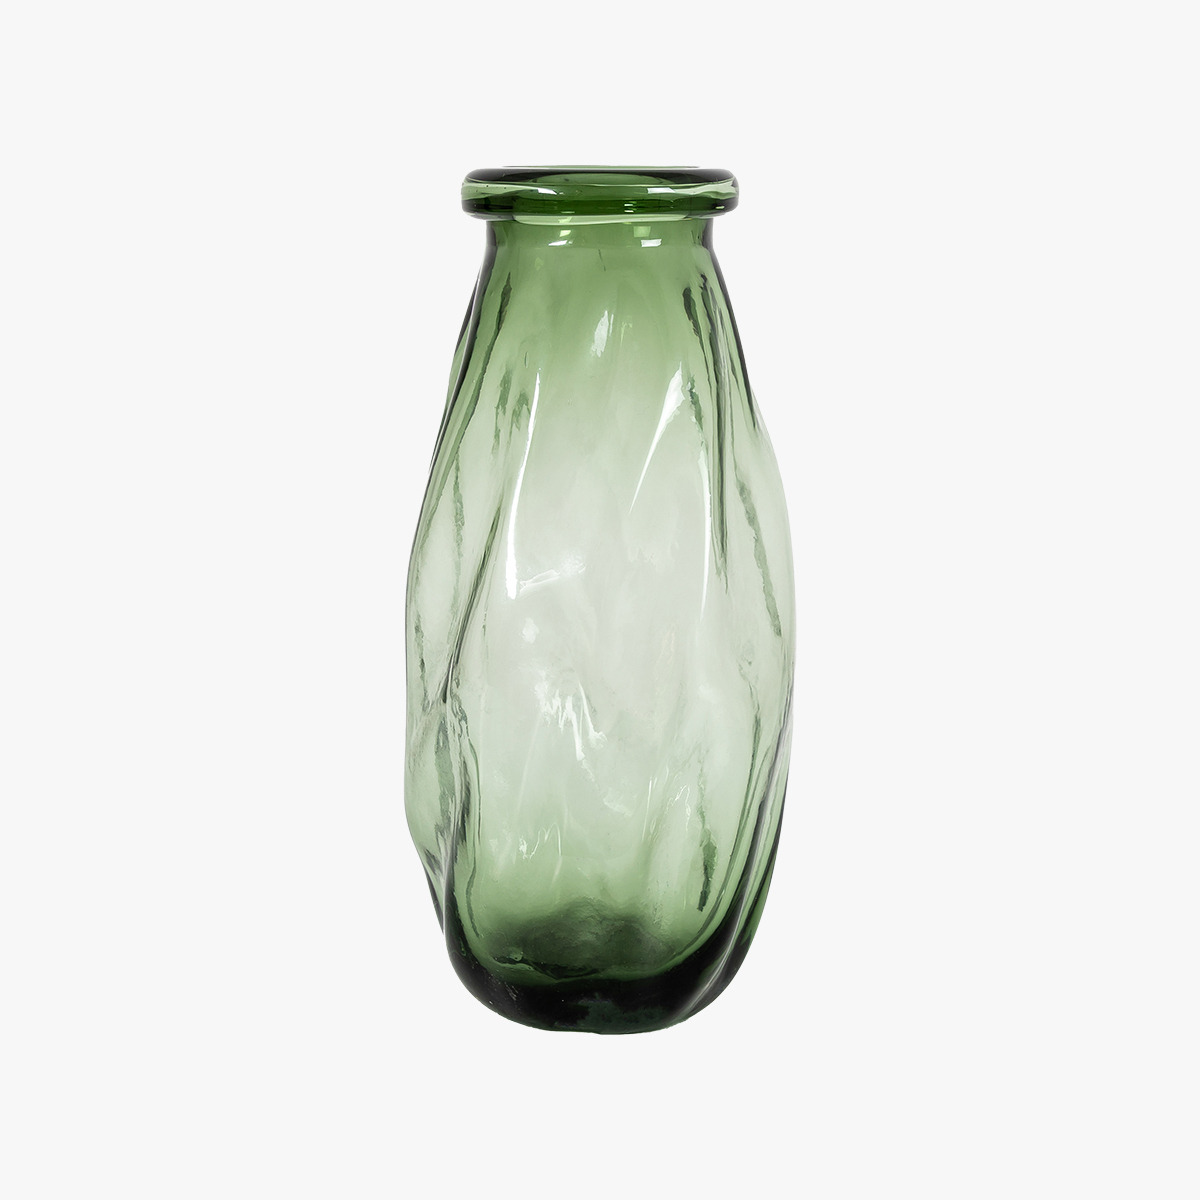 Ripple Vase in Green - Large